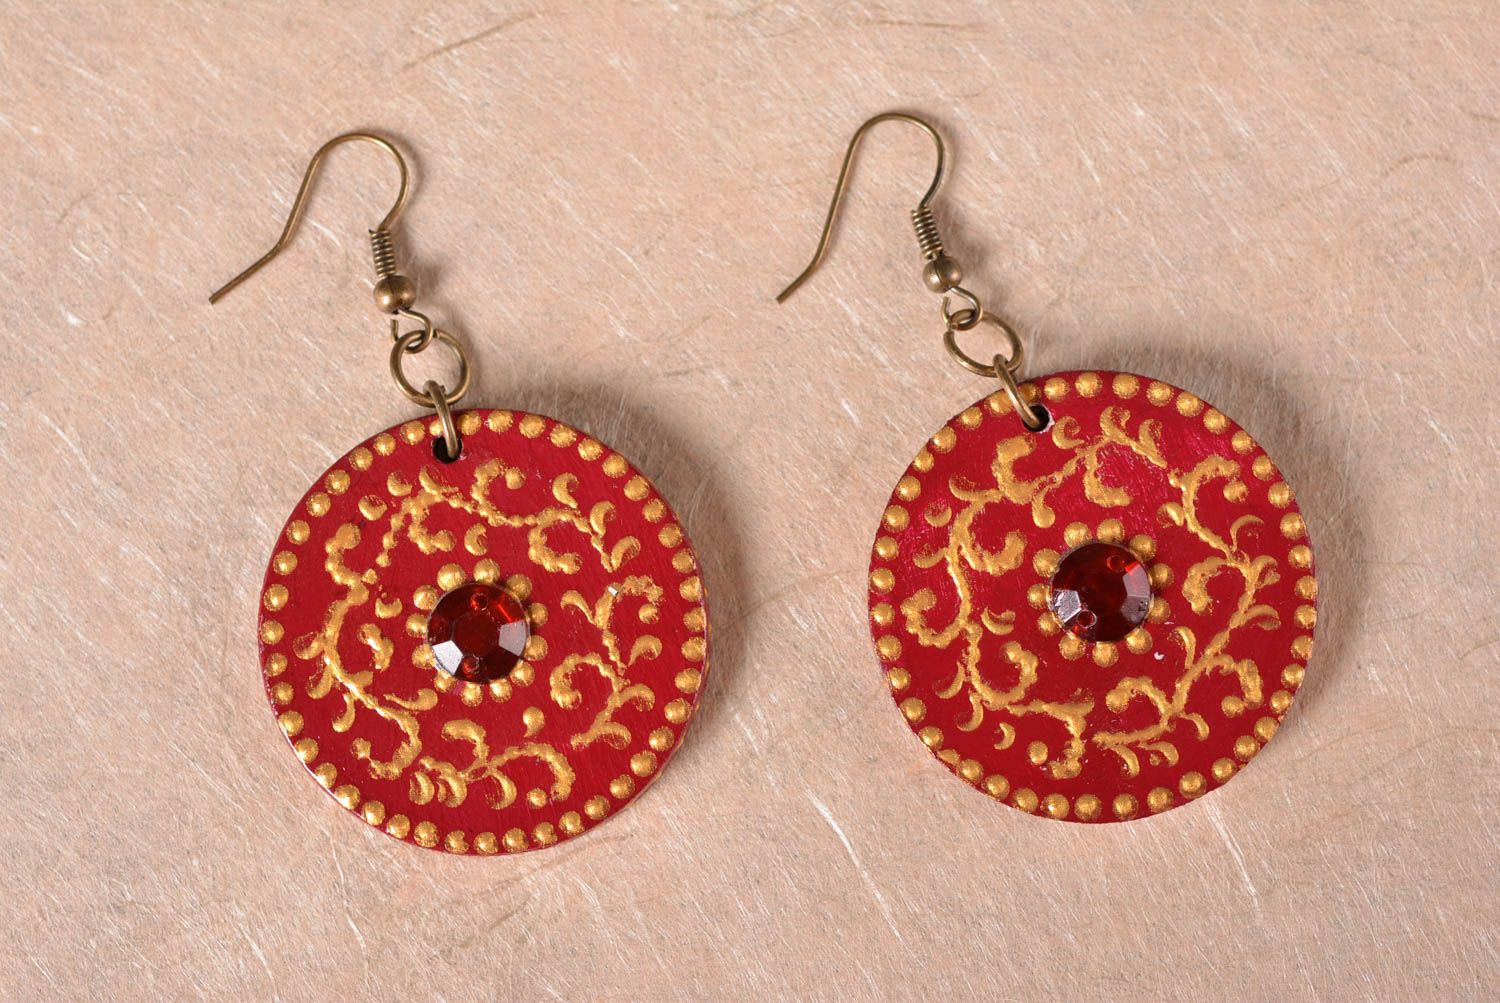 Stylish handmade wooden earrings artisan jewelry designs fashion accessories photo 2